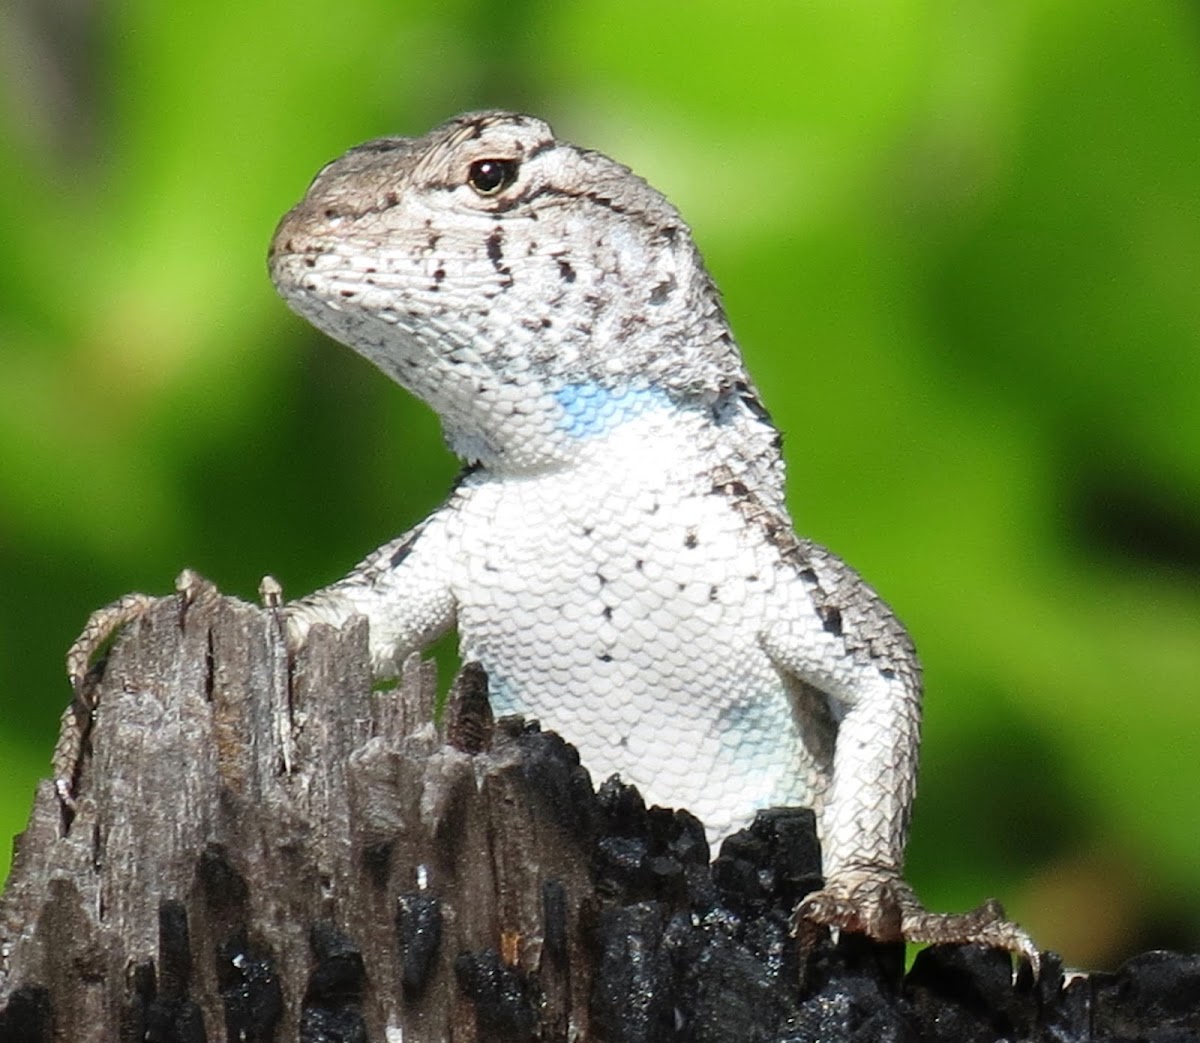 Florida scrub lizard